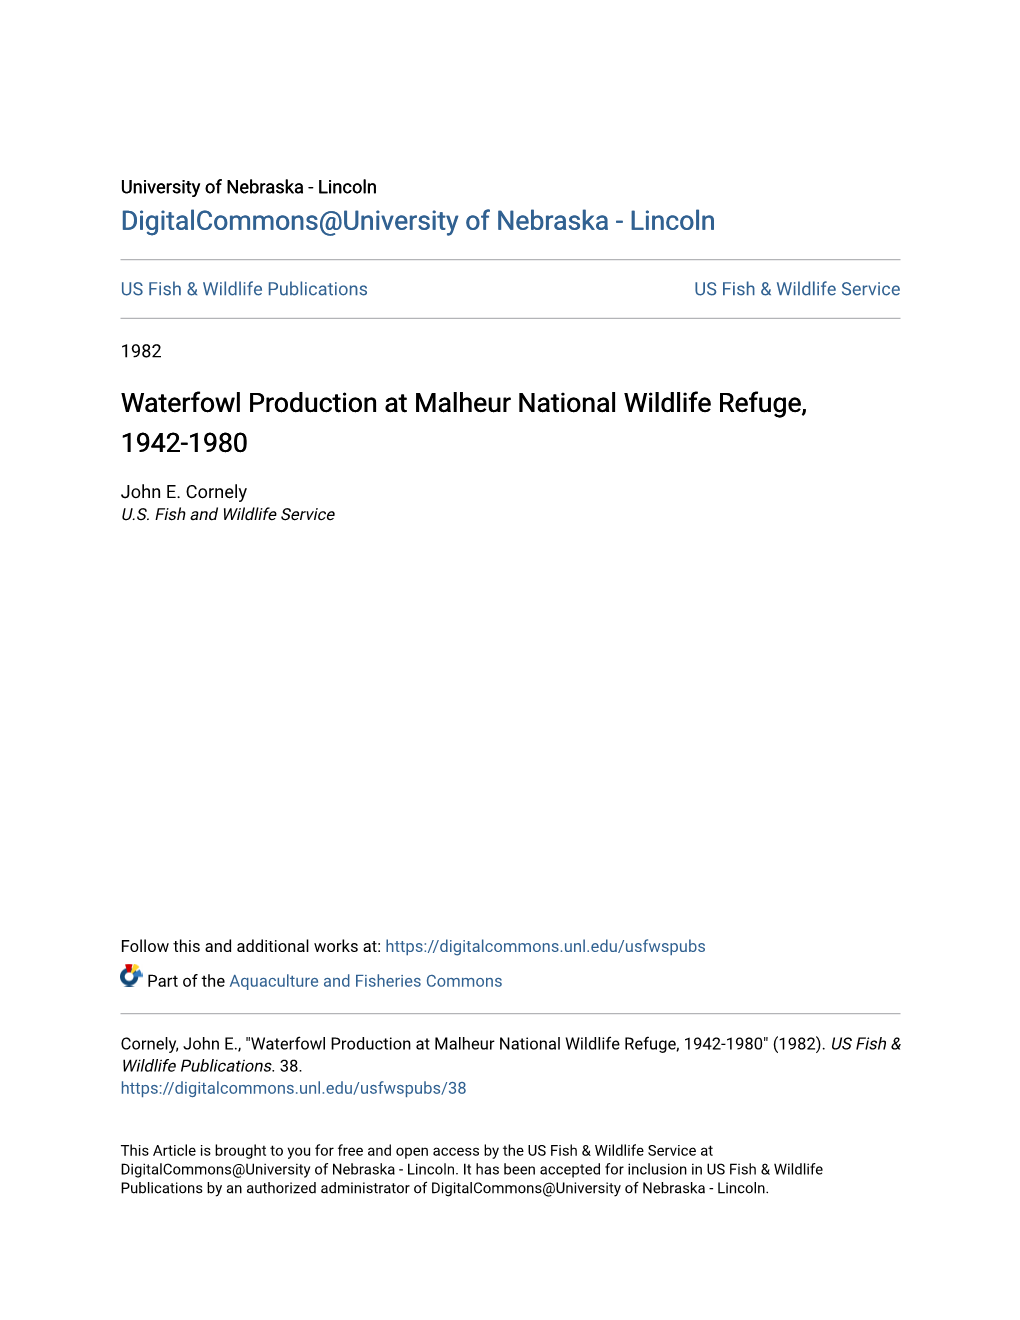 Waterfowl Production at Malheur National Wildlife Refuge, 1942-1980